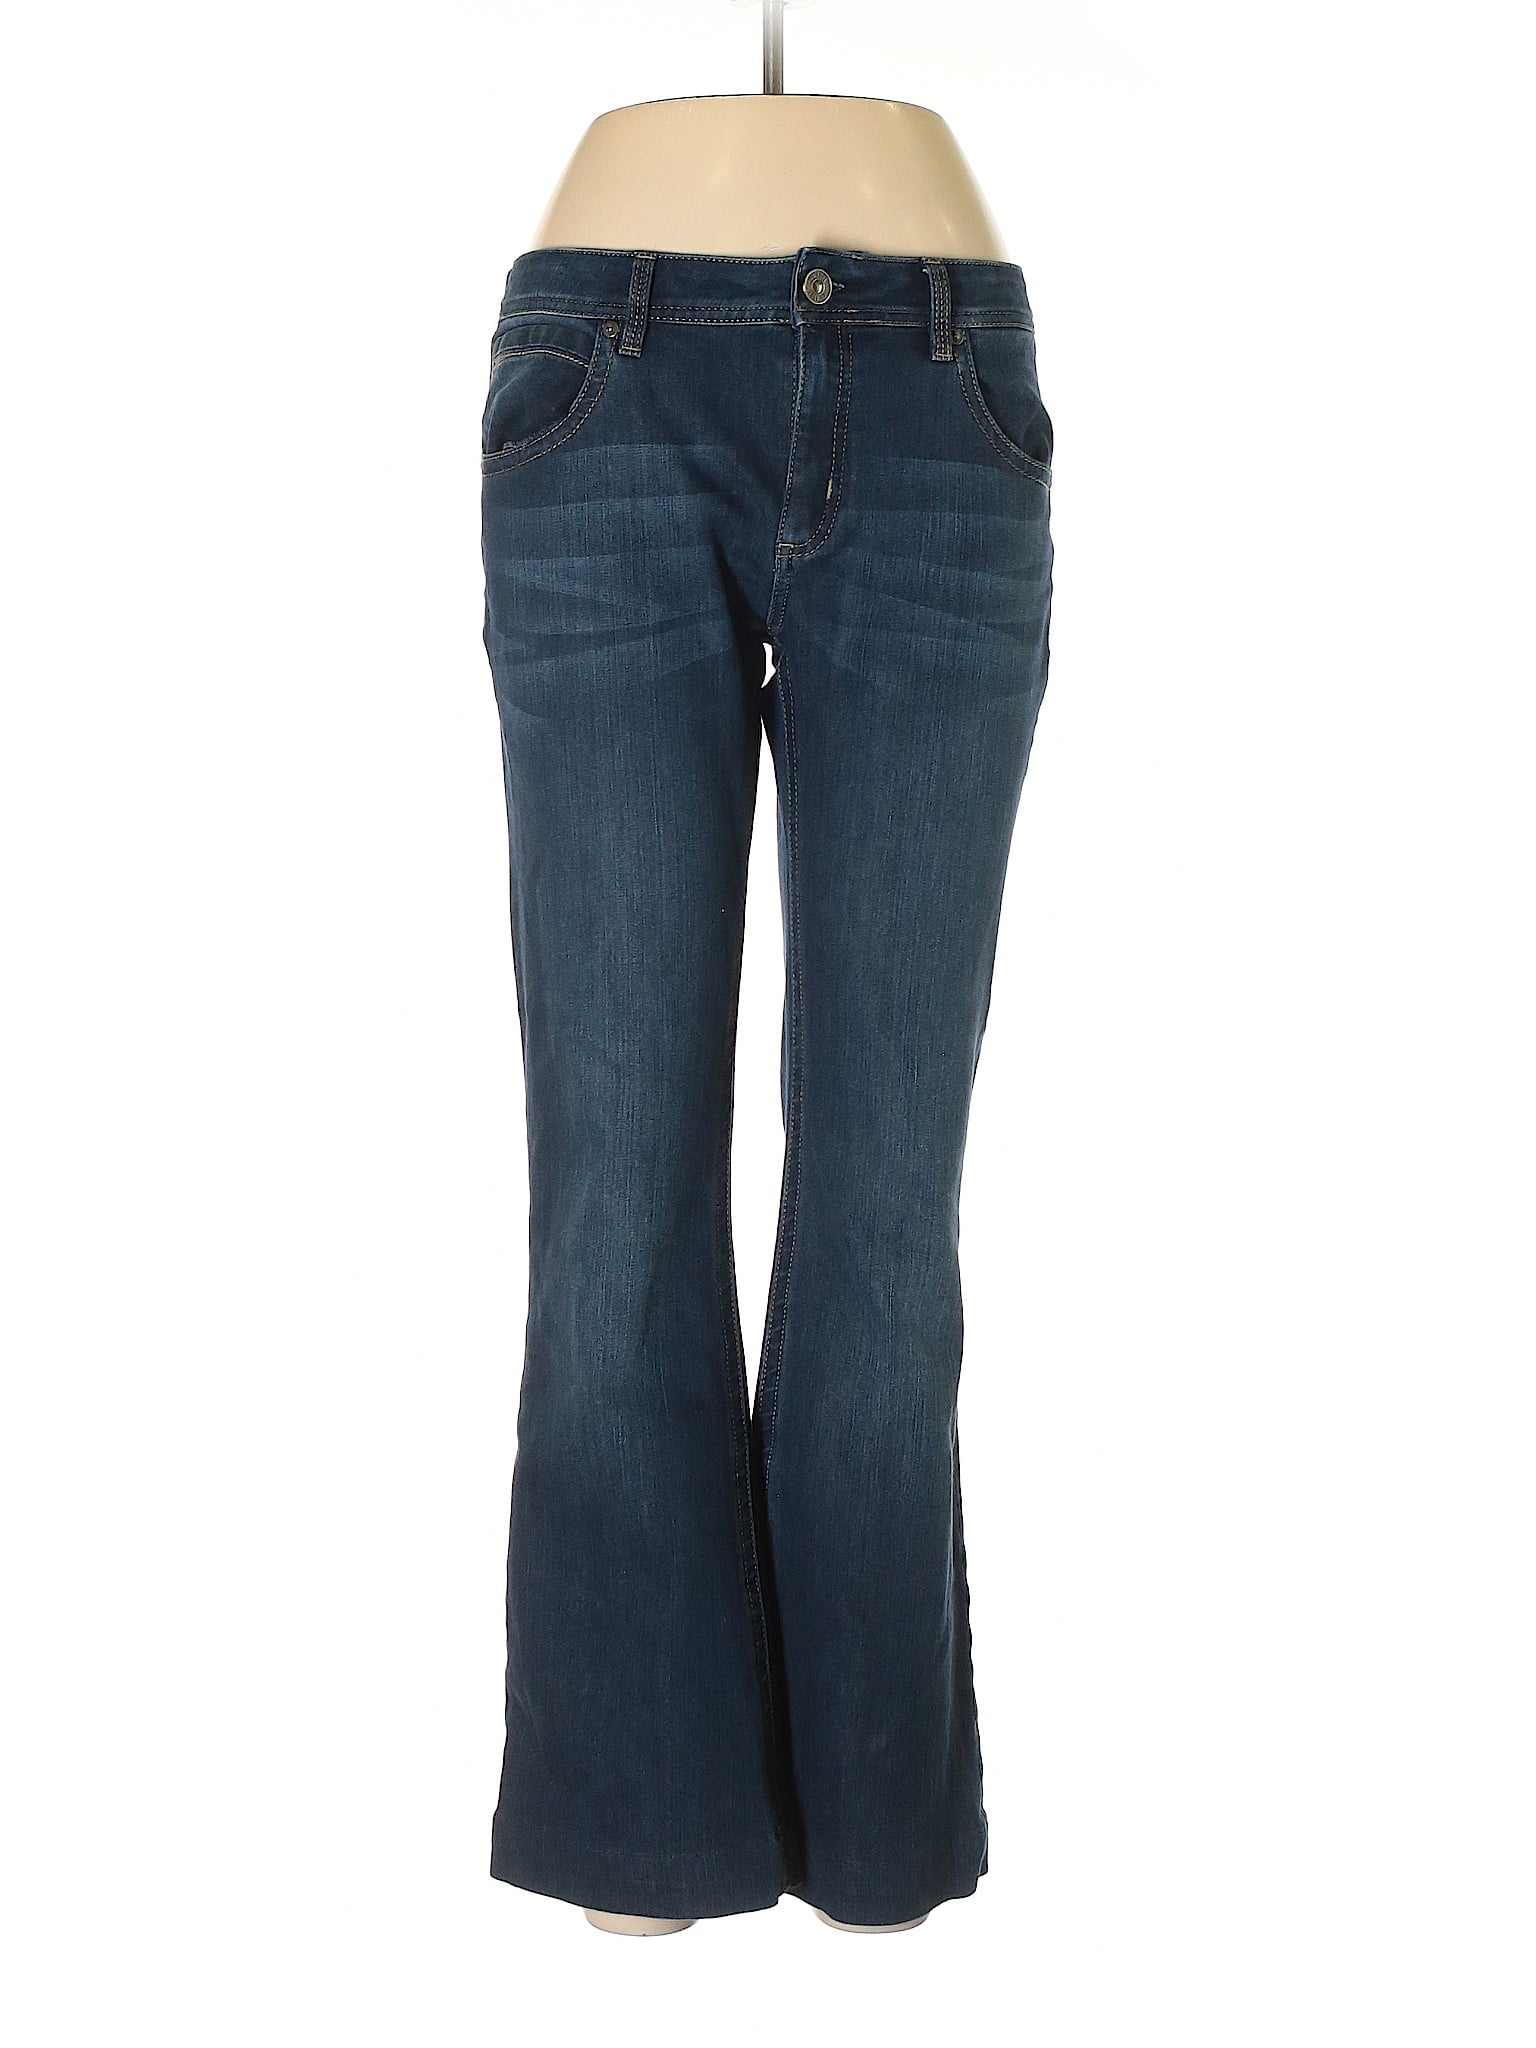 DL1961 - Pre-Owned DL1961 Women's Size 31W Jeans - Walmart.com ...